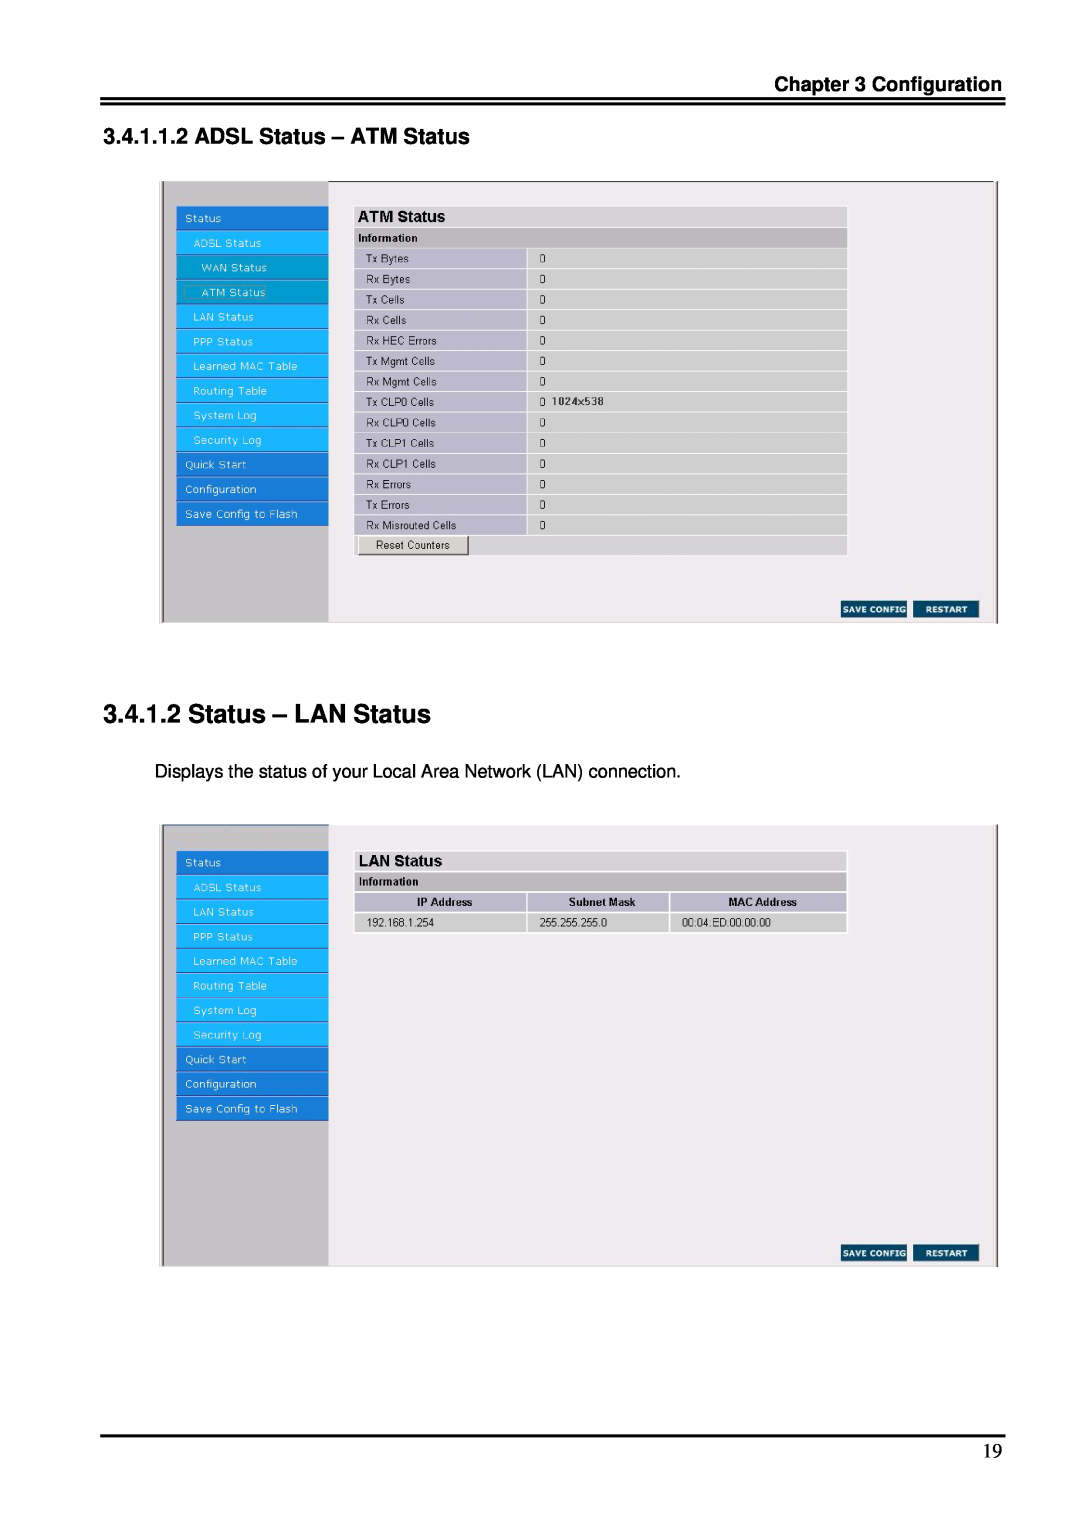 Billion Electric Company 7100S user manual Status - LAN Status, ADSL Status - ATM Status, Configuration 